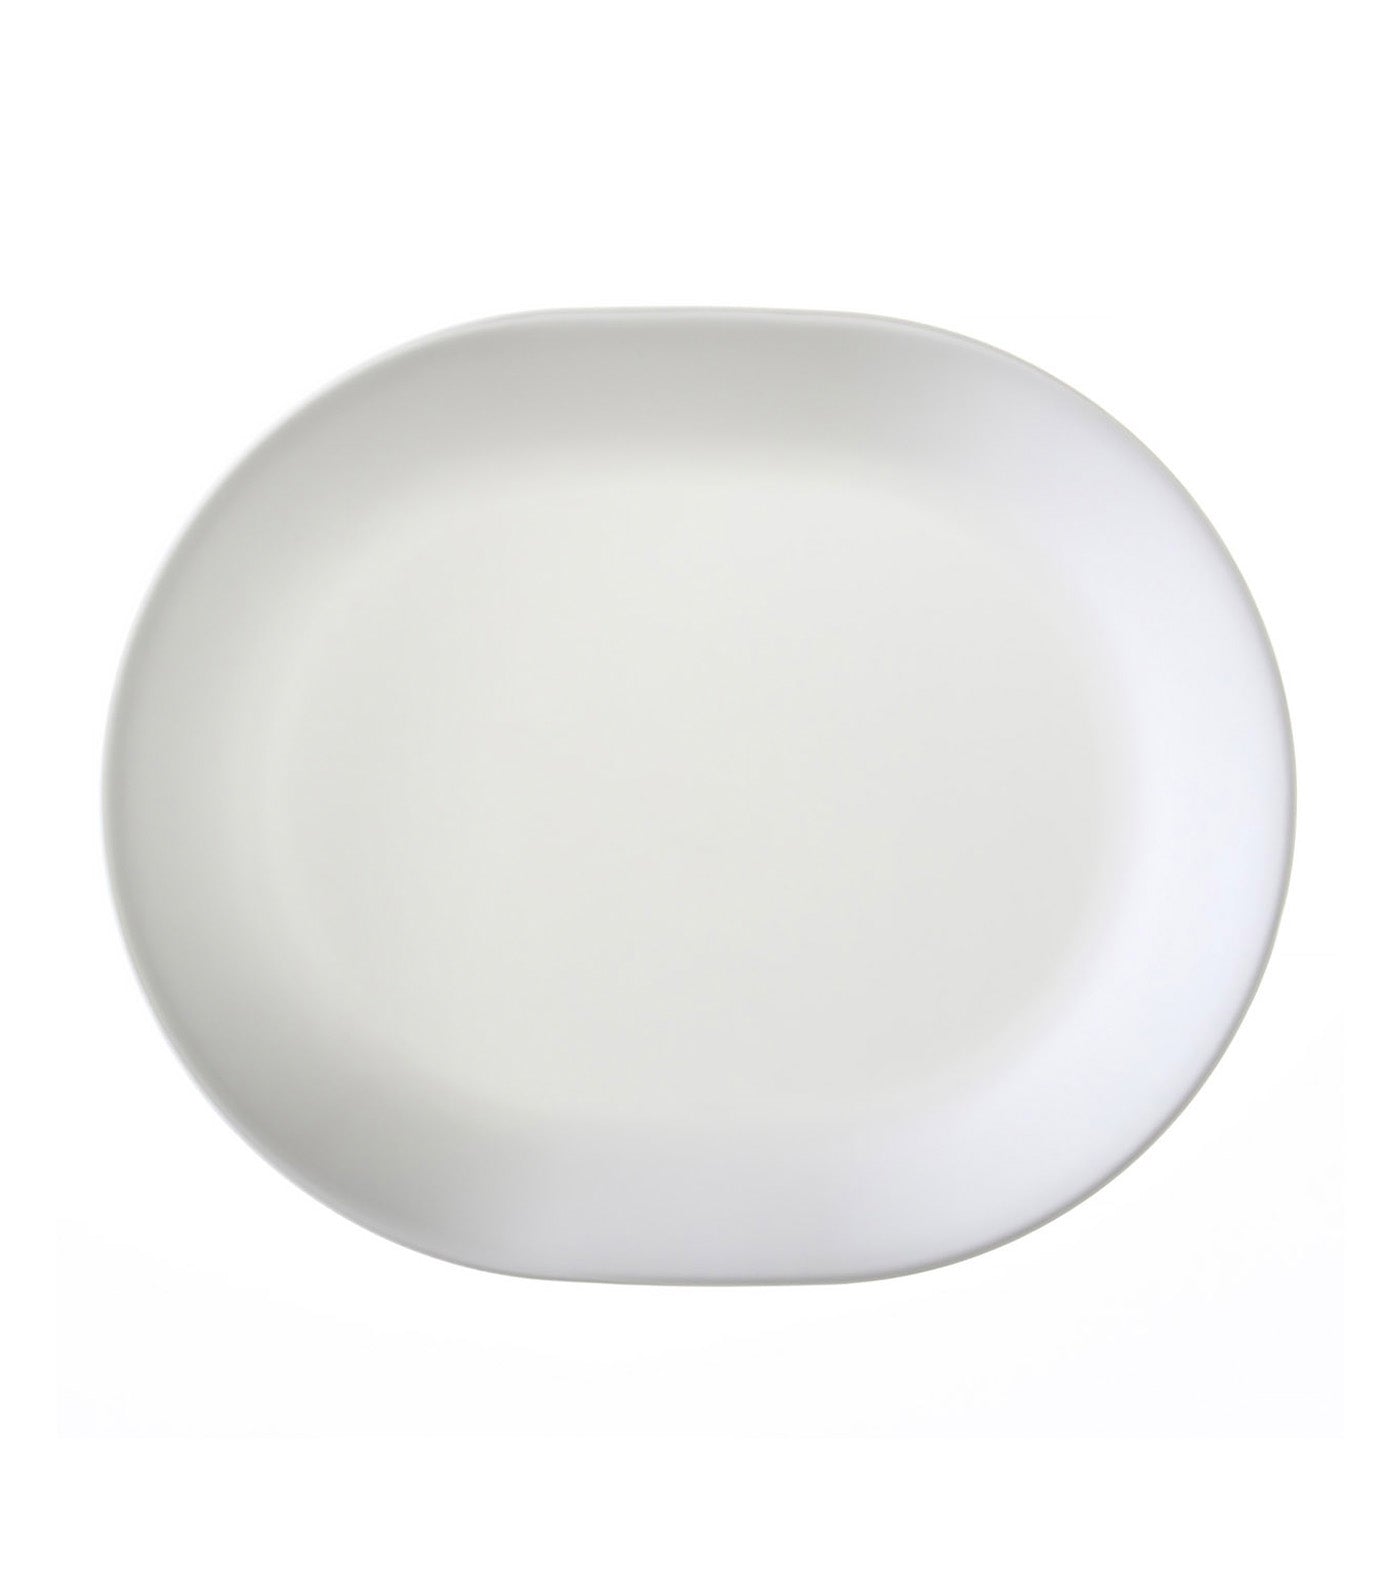 Corelle Serving Bowl & Platter Set - Winter Frost White